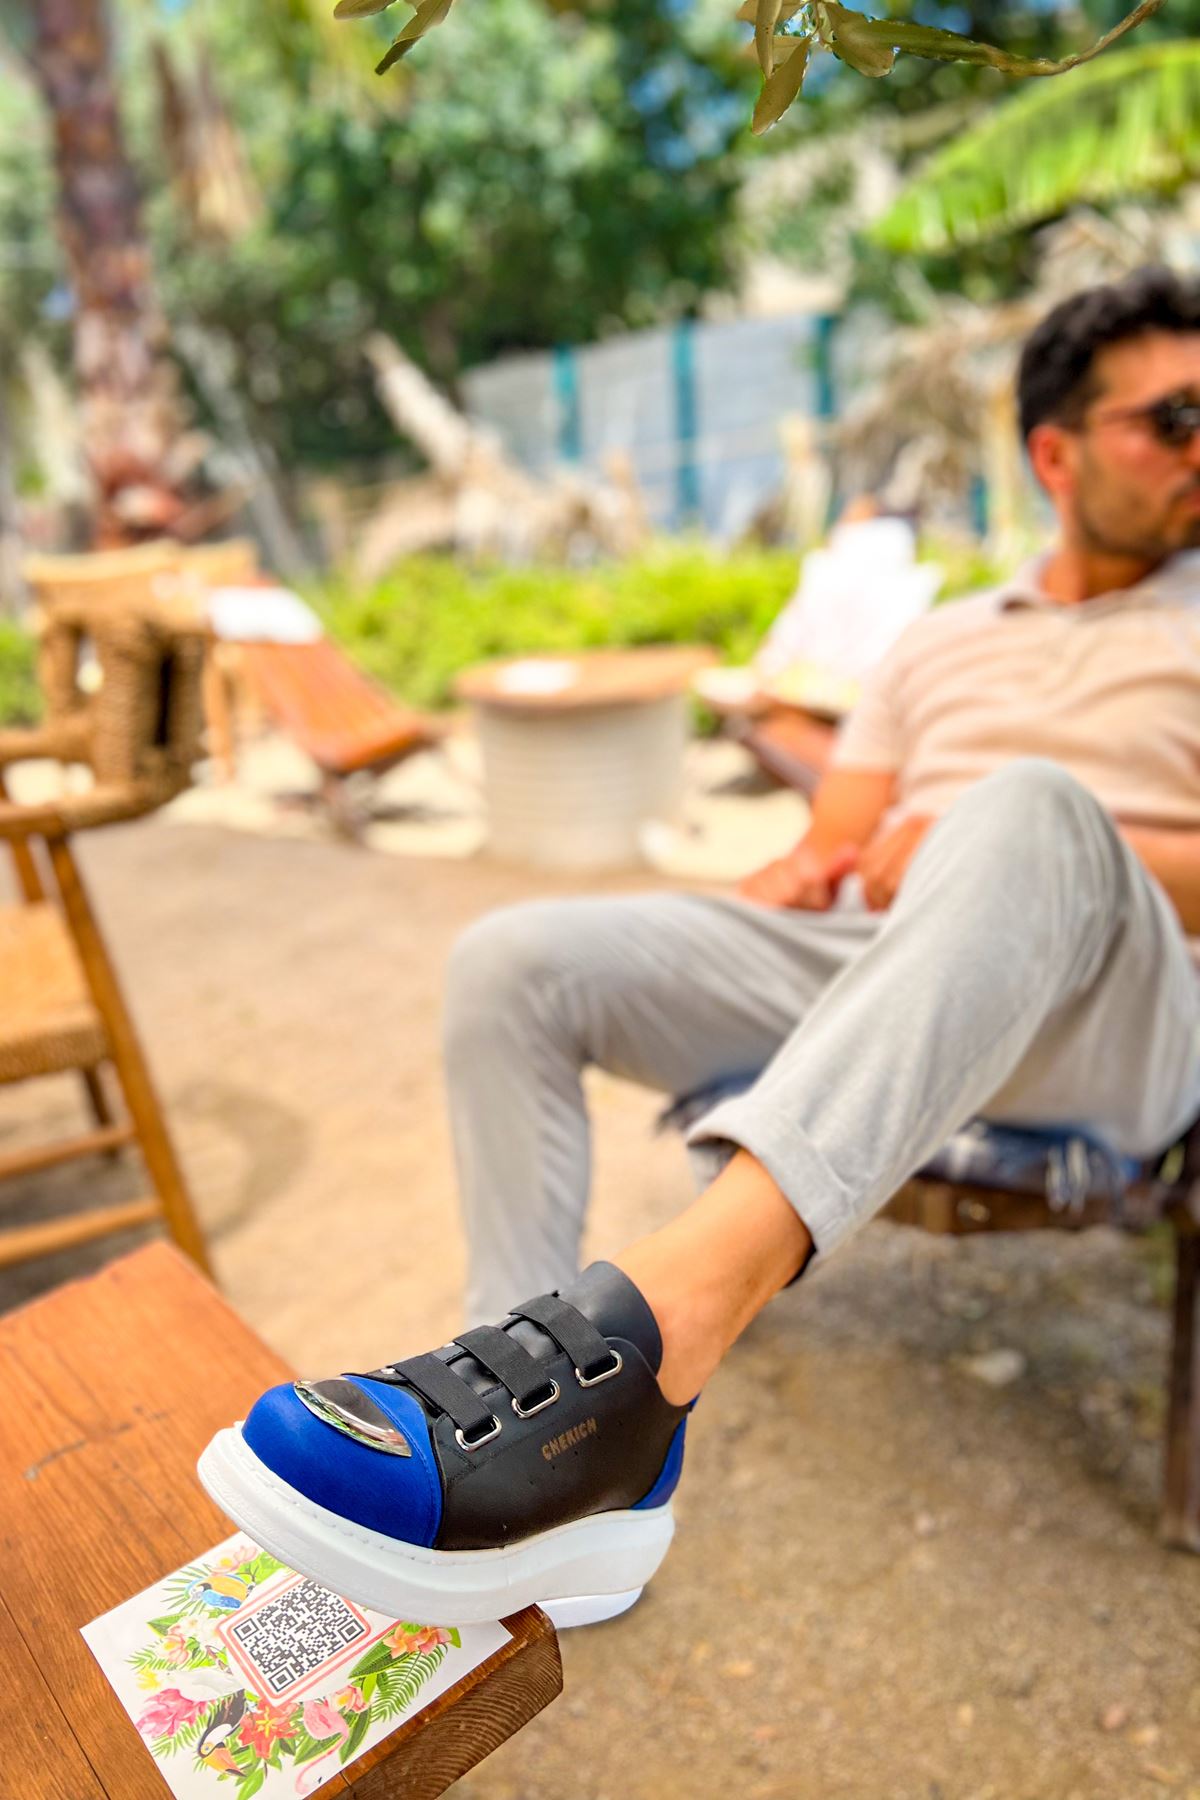 CH251 Garni BT Men's Shoes BLACK/SAX BLUE - STREETMODE ™